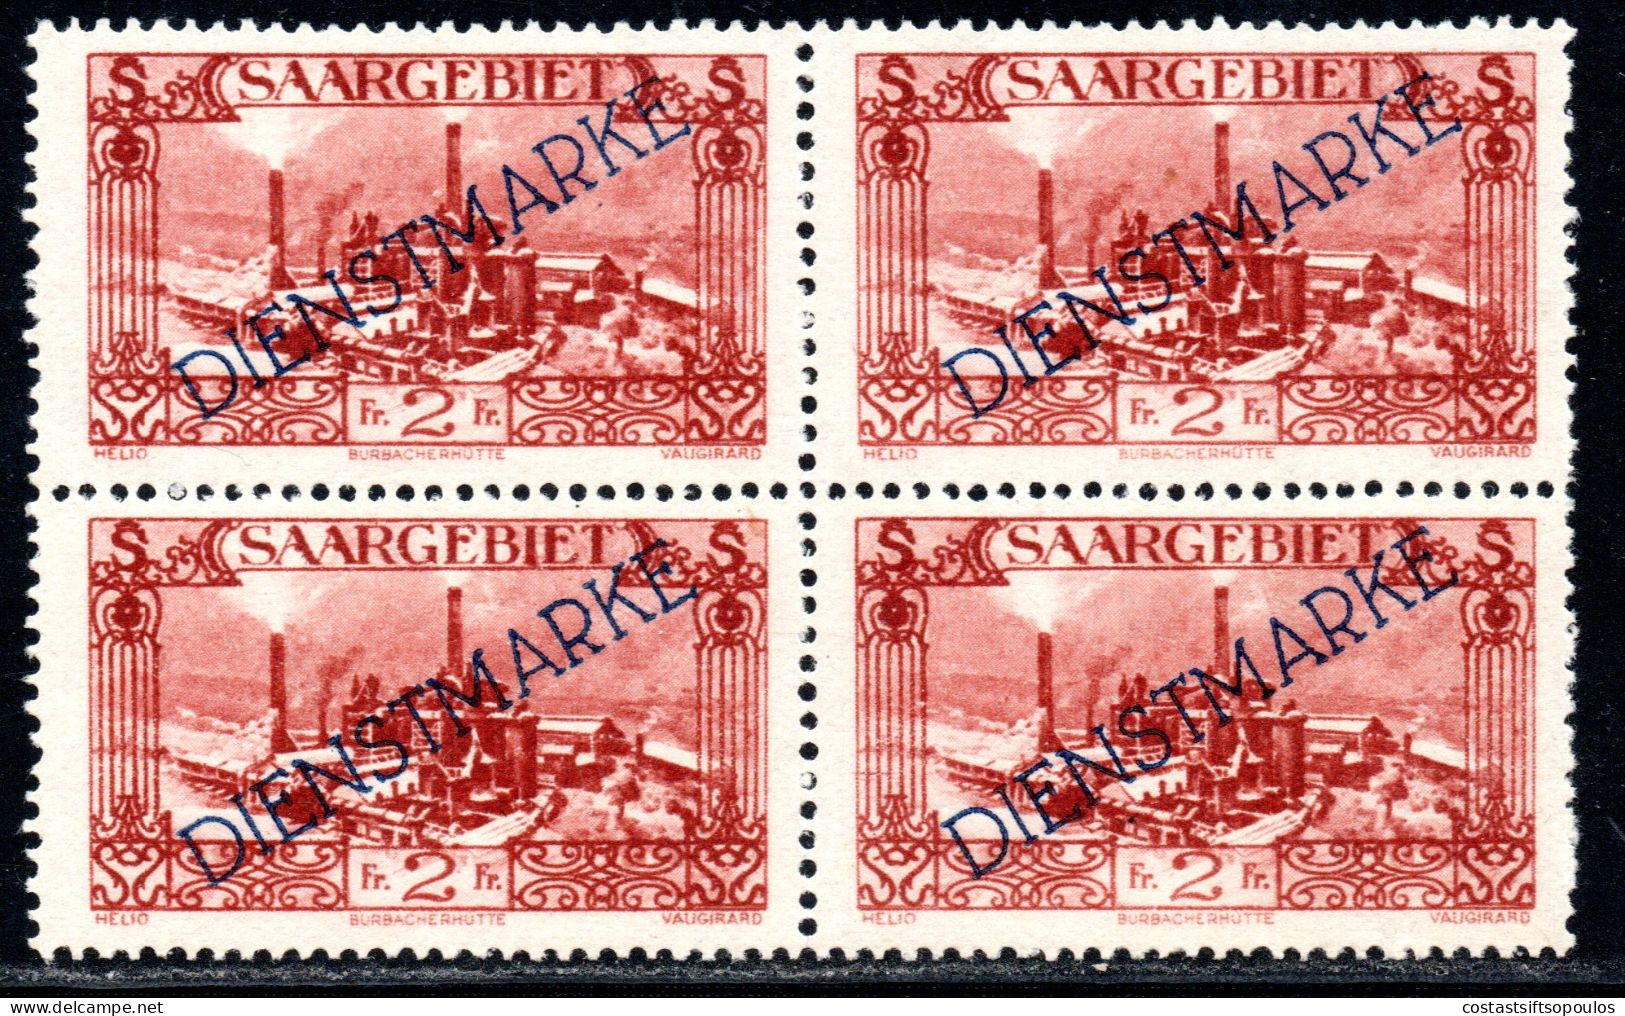 3044. 1927 2 FR. DIENSTMARKE MNH BLOCK OF 4 - Dienstmarken